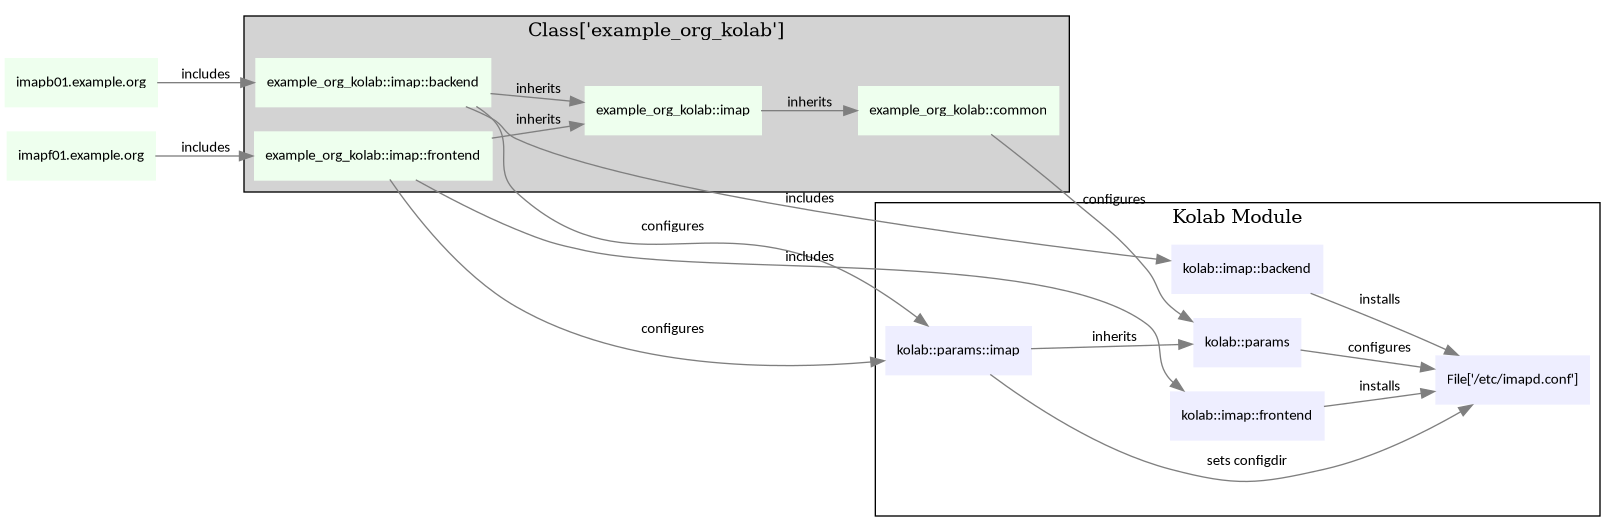 digraph {
        rankdir = LR;
        splines = true;
        overlab = prism;

        edge [color=gray50, fontname=Calibri, fontsize=11];
        node [shape=record, fontname=Calibri, fontsize=11, style=filled];

        "imapb01.example.org" [color="#EEFFEE"];
        "imapf01.example.org" [color="#EEFFEE"];

        subgraph cluster_example_org_kolab {
                label = "Class['example_org_kolab']";
                style = filled;

                "example_org_kolab::common" [color="#EEFFEE"];

                "example_org_kolab::imap" [color="#EEFFEE"];
                "example_org_kolab::imap::backend" [color="#EEFFEE"];
                "example_org_kolab::imap::frontend" [color="#EEFFEE"];
            }

        subgraph cluster_module_kolab {
                label = "Kolab Module";

                "kolab::imap::backend" [color="#EEEEFF"];
                "kolab::imap::frontend" [color="#EEEEFF"];
                "kolab::params" [color="#EEEEFF"];
                "kolab::params::imap" [color="#EEEEFF"];

                "File['/etc/imapd.conf']" [color="#EEEEFF"];
            }

        "example_org_kolab::common" -> "kolab::params" [label="configures"];

        "imapb01.example.org" -> "example_org_kolab::imap::backend" [label="includes"];
        "example_org_kolab::imap::backend" -> "example_org_kolab::imap" [label="inherits"];
        "example_org_kolab::imap" -> "example_org_kolab::common" [label="inherits"];
        "example_org_kolab::imap::backend" -> "kolab::params::imap" [label="configures"];
        "example_org_kolab::imap::backend" -> "kolab::imap::backend" [label="includes"];

        "imapf01.example.org" -> "example_org_kolab::imap::frontend" [label="includes"];
        "example_org_kolab::imap::frontend" -> "example_org_kolab::imap" [label="inherits"];
        "example_org_kolab::imap::frontend" -> "kolab::params::imap" [label="configures"];
        "example_org_kolab::imap::frontend" -> "kolab::imap::frontend" [label="includes"];

        "kolab::imap::backend" -> "File['/etc/imapd.conf']" [label="installs"];
        "kolab::imap::frontend" -> "File['/etc/imapd.conf']" [label="installs"];

        "kolab::params::imap" -> "kolab::params" [label="inherits"];
        "kolab::params::imap" -> "File['/etc/imapd.conf']" [label="sets configdir"];
        "kolab::params" -> "File['/etc/imapd.conf']" [label="configures"];
    }